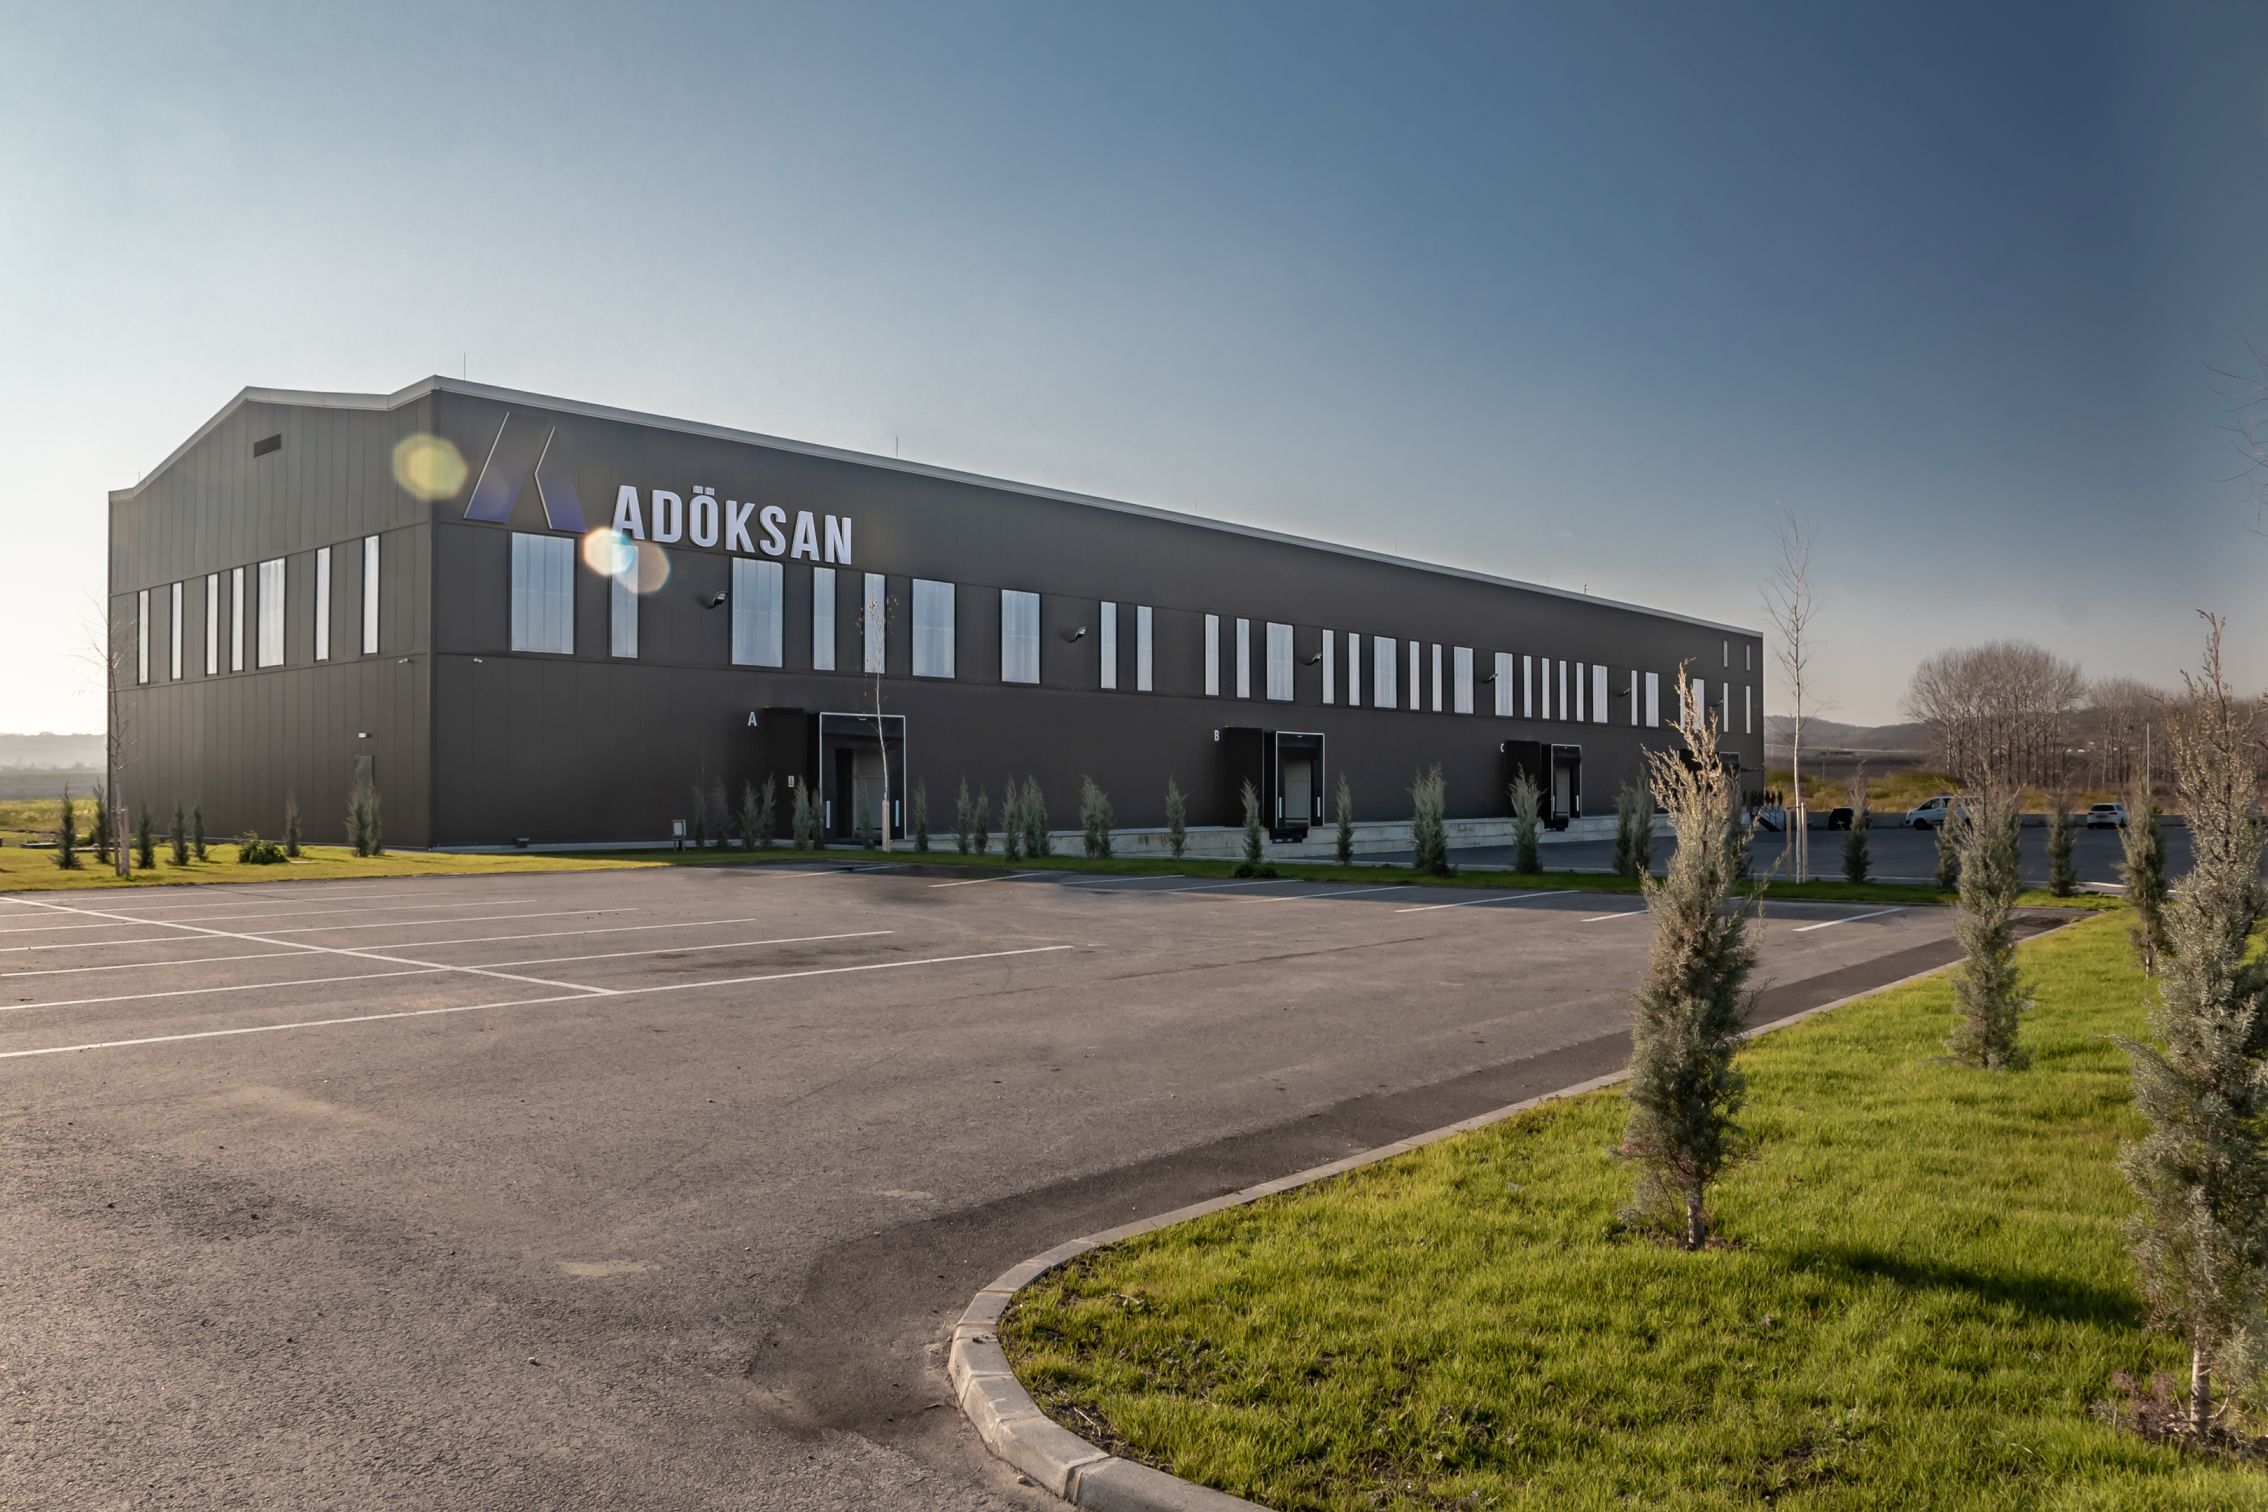 Adoksan Hungary started its operations